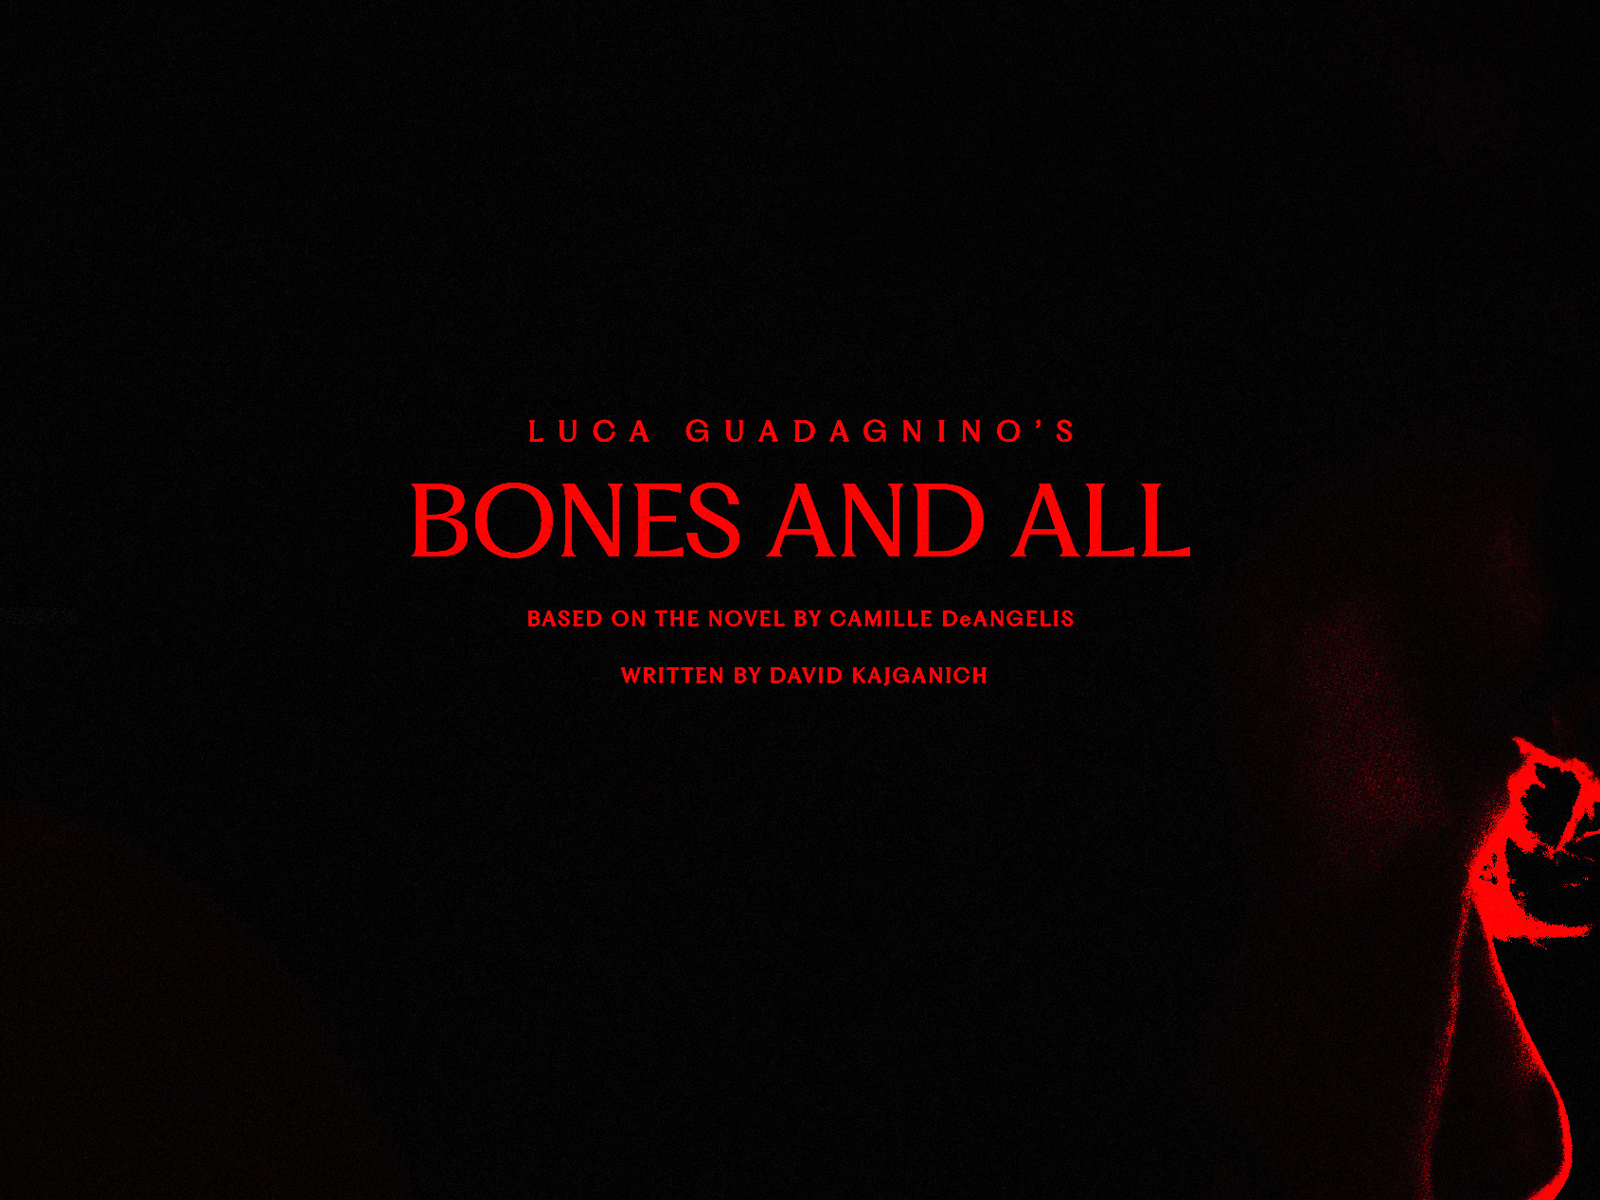 Luca Guadagnino's 'Bones and All' bones and all key art luca guadagnino movie poster movie posters poster poster desginer poster design timothée chalamet